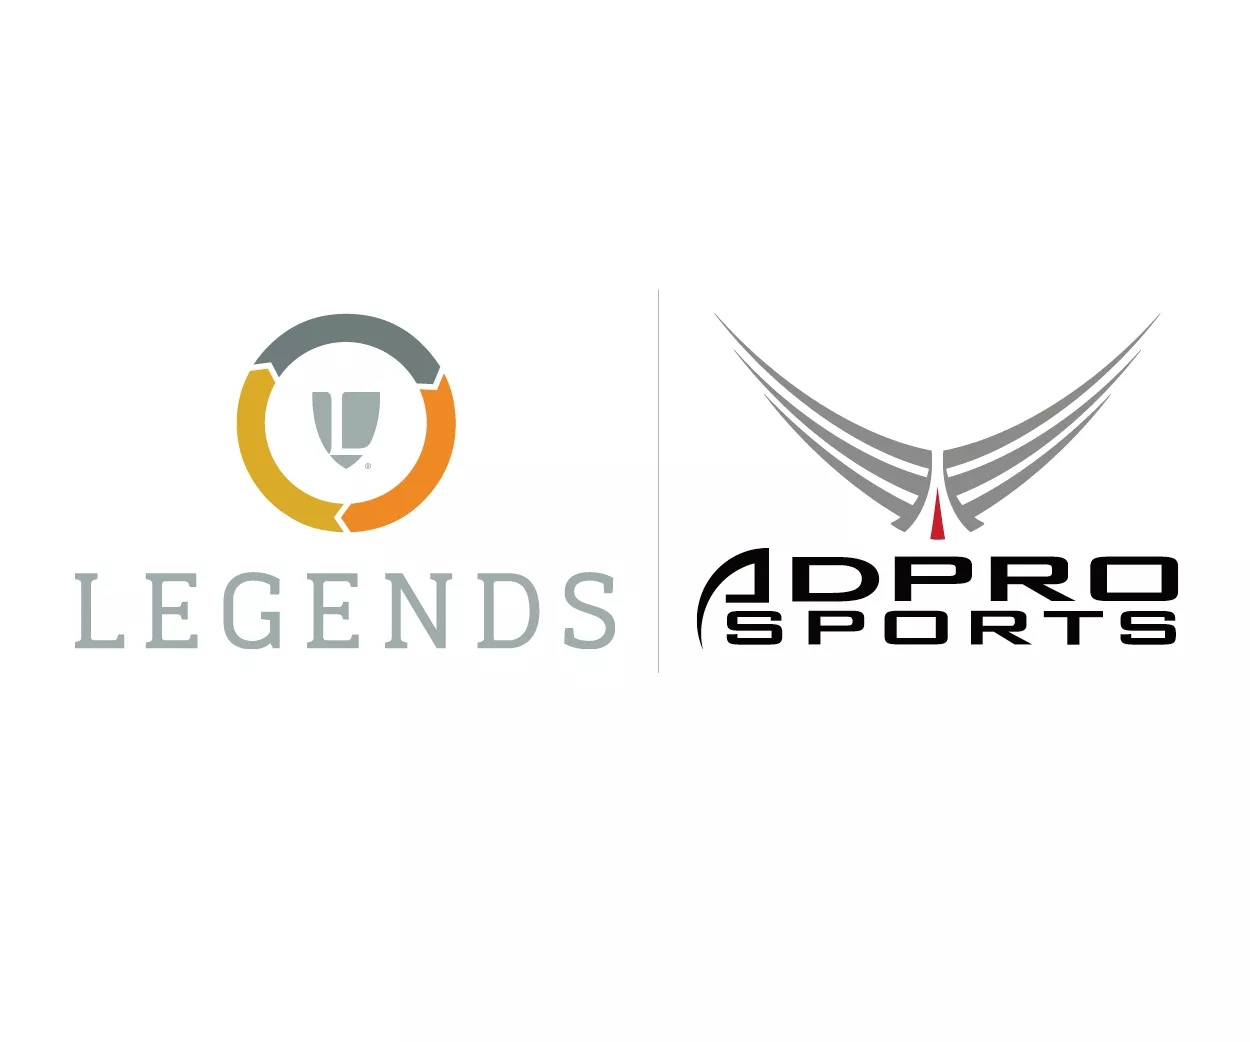 23TT - Legends_Adpro Sponsor logo